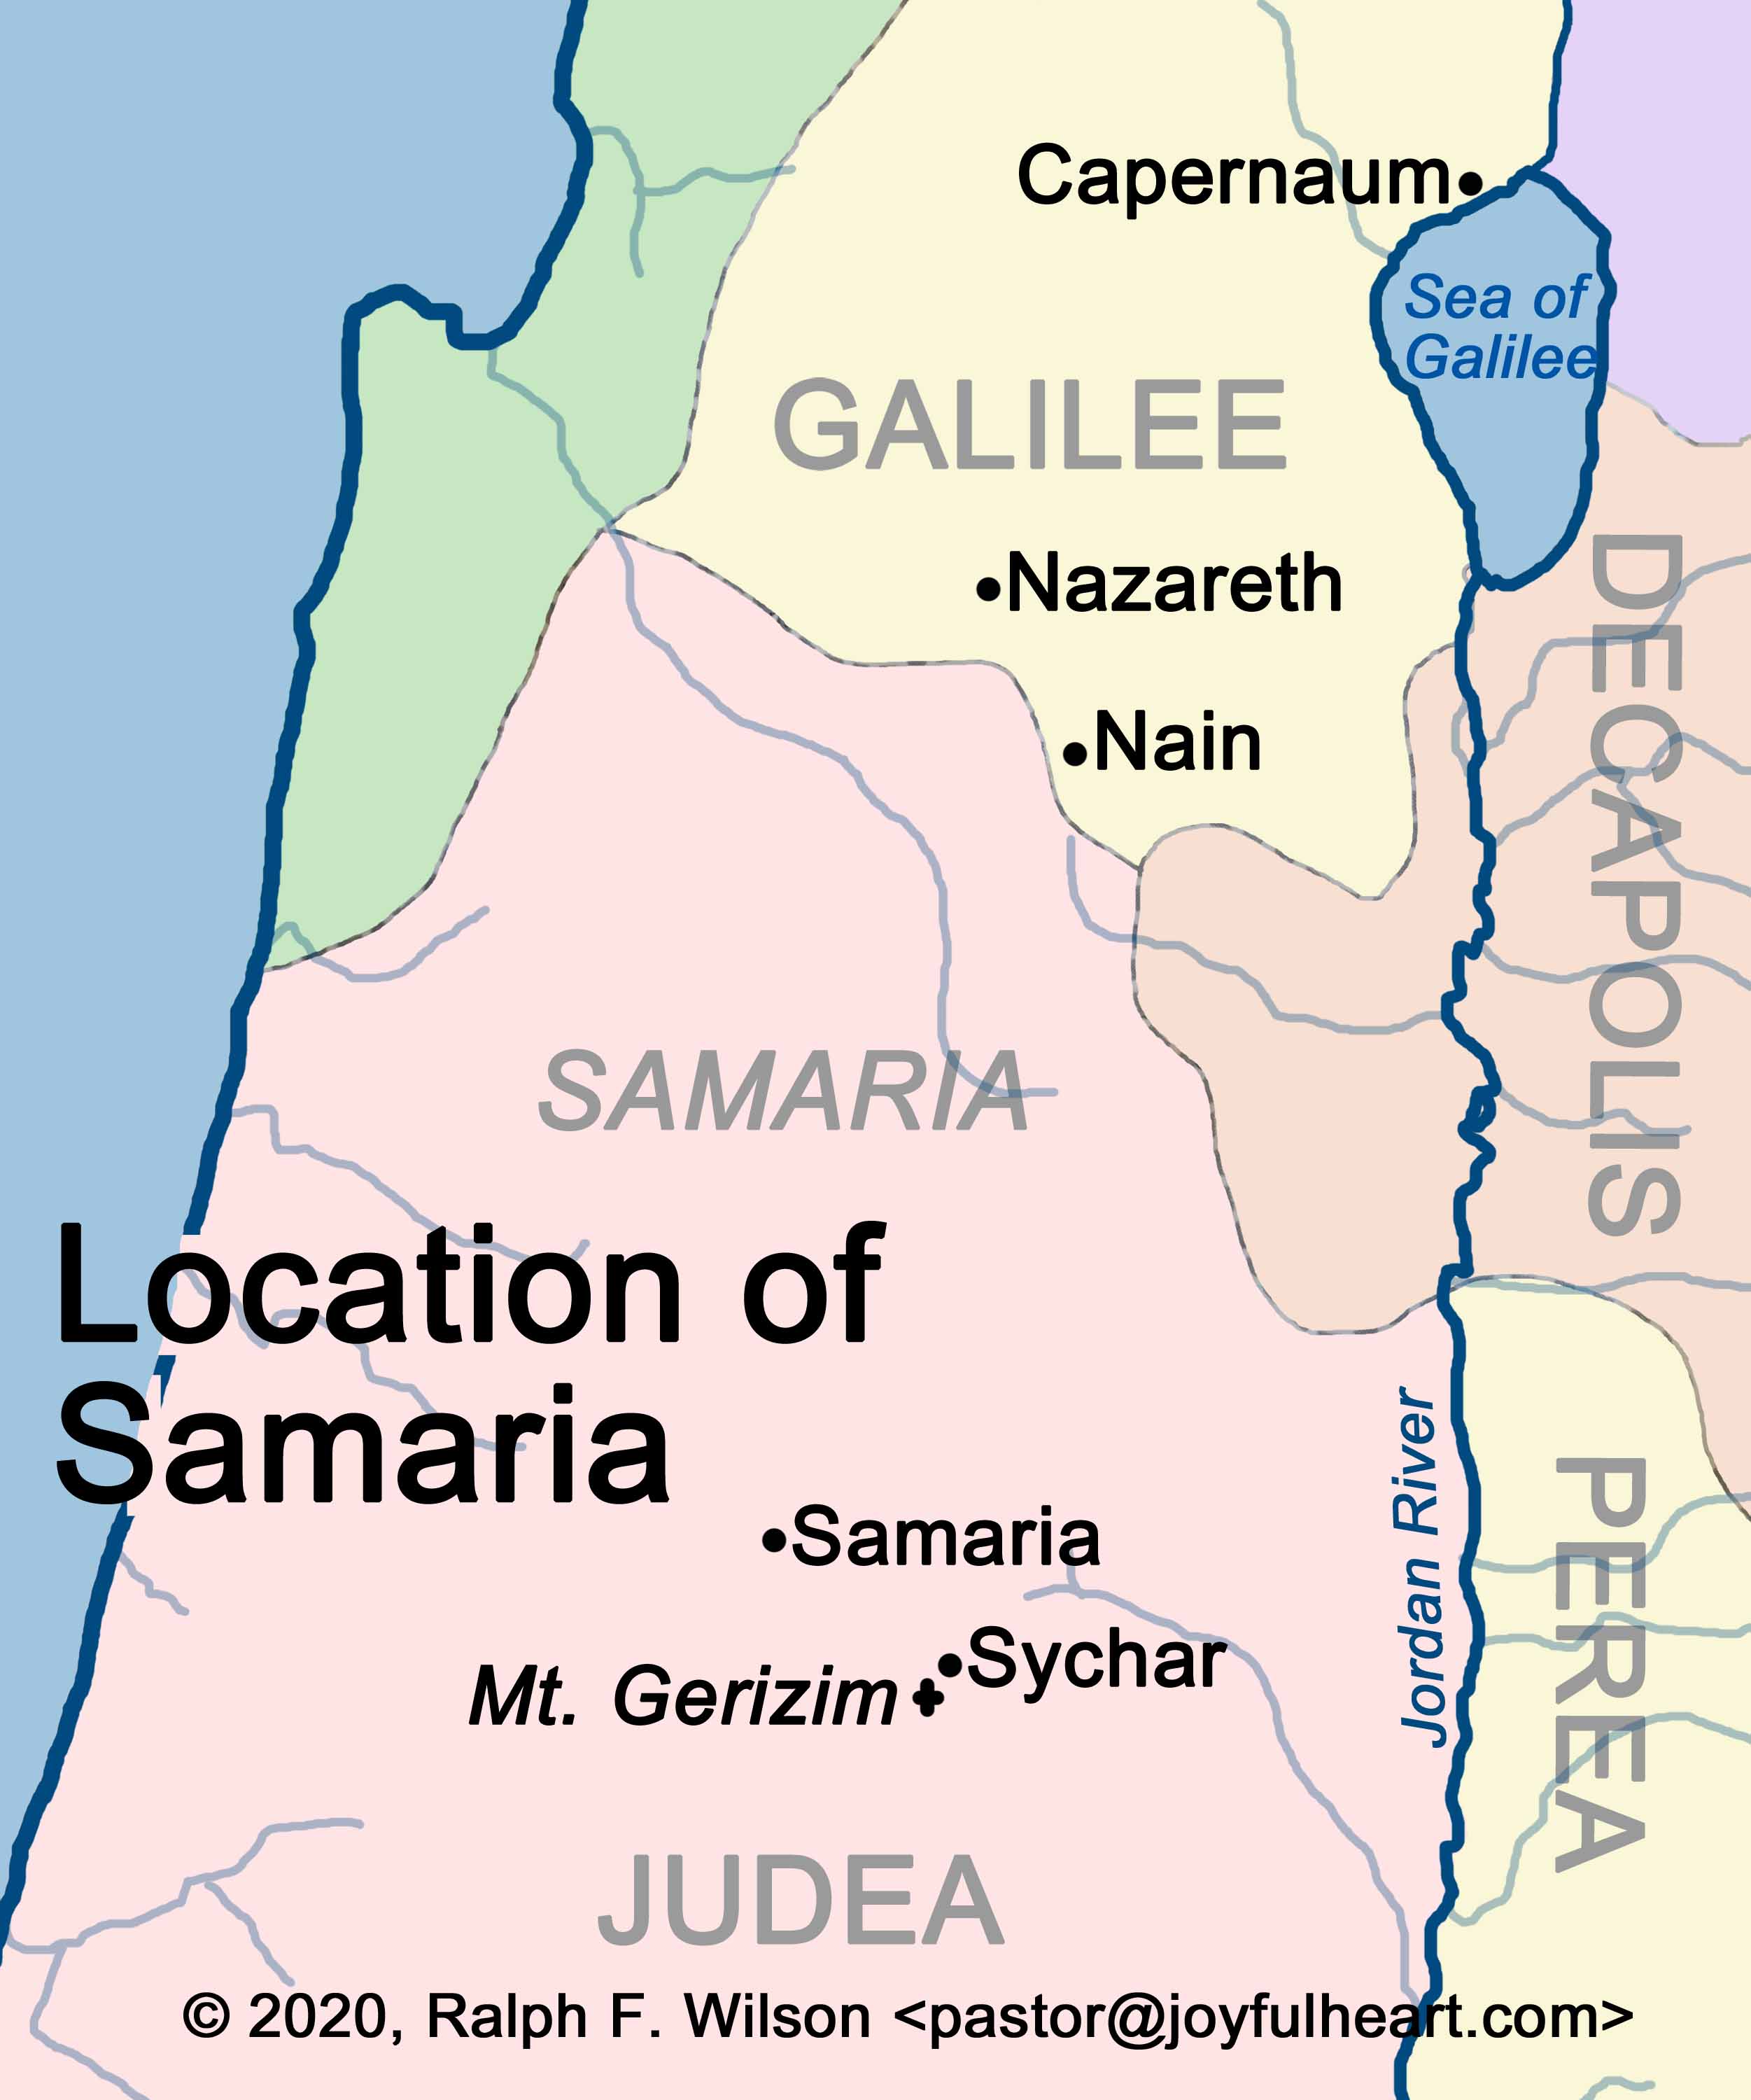 samaritans bible map